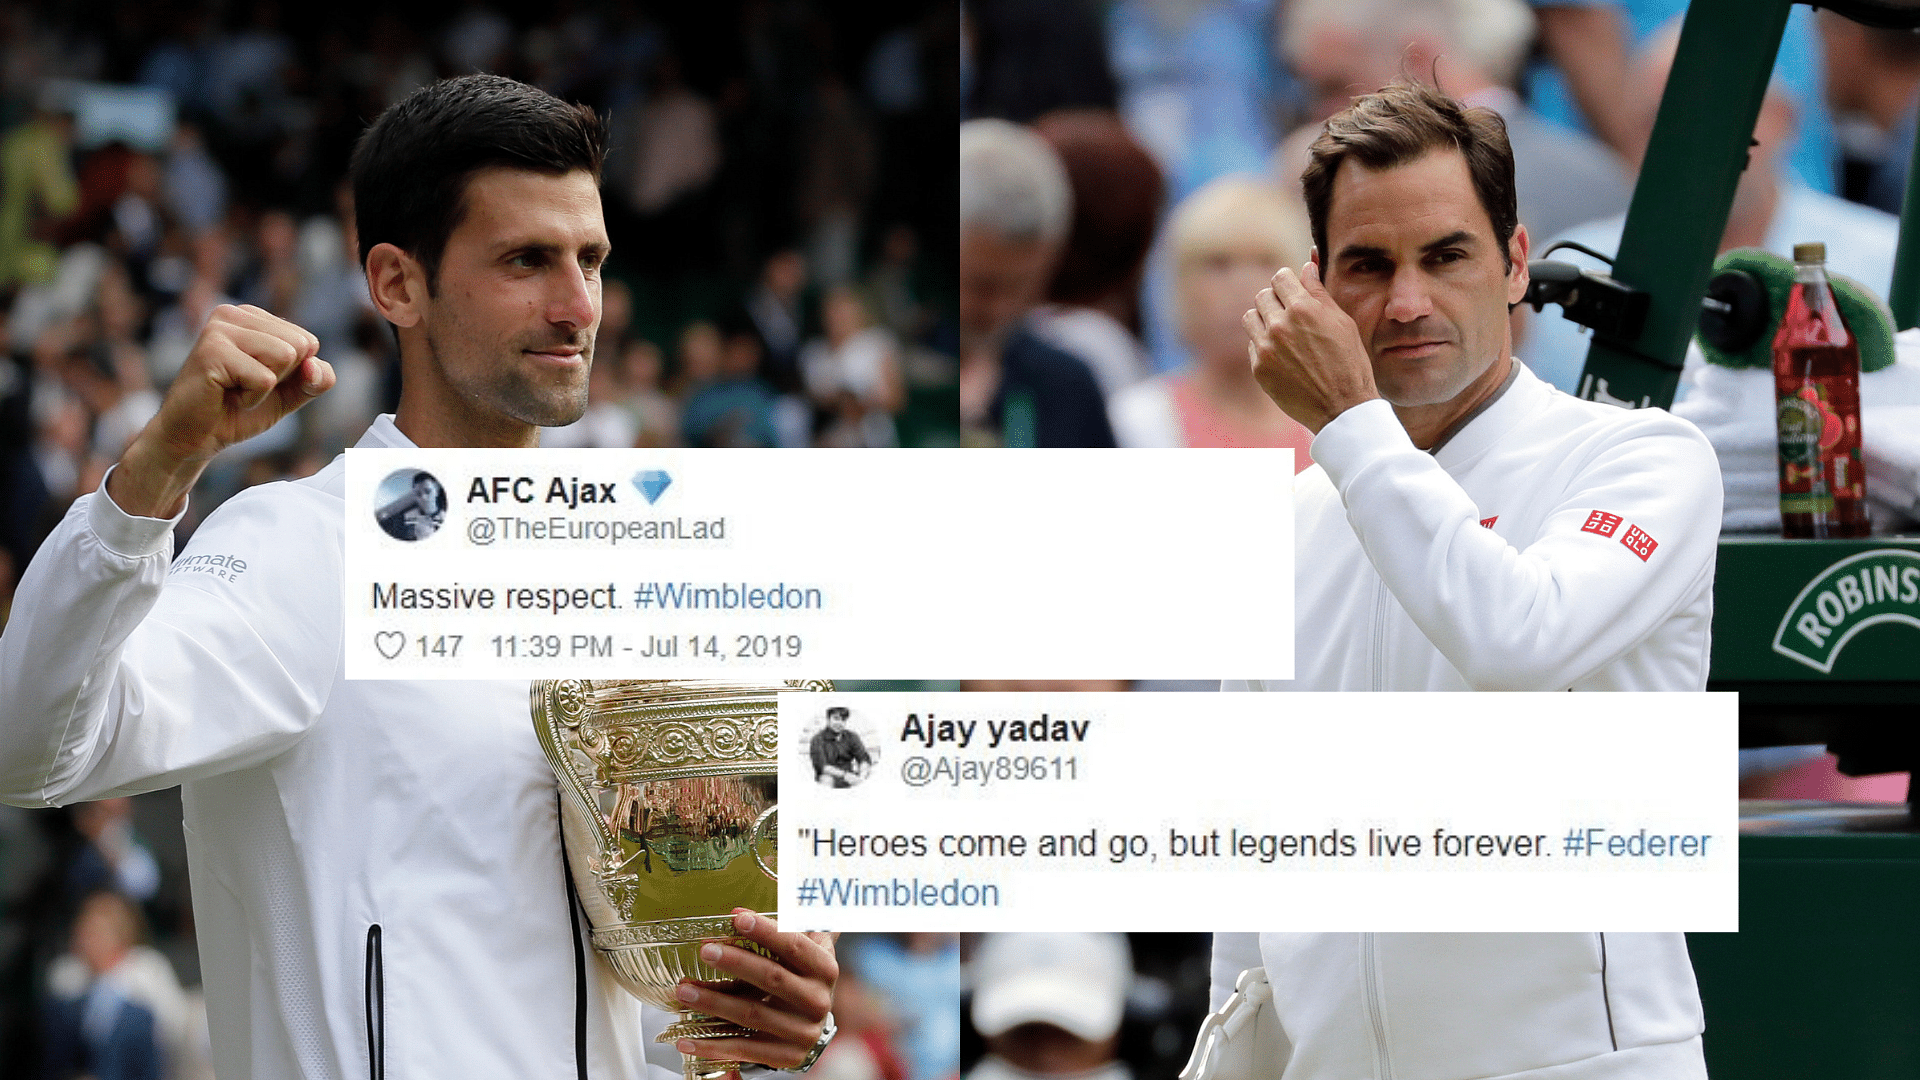 Novak Djokovic registered a win against Roger Federer at the Wimbledon Final.